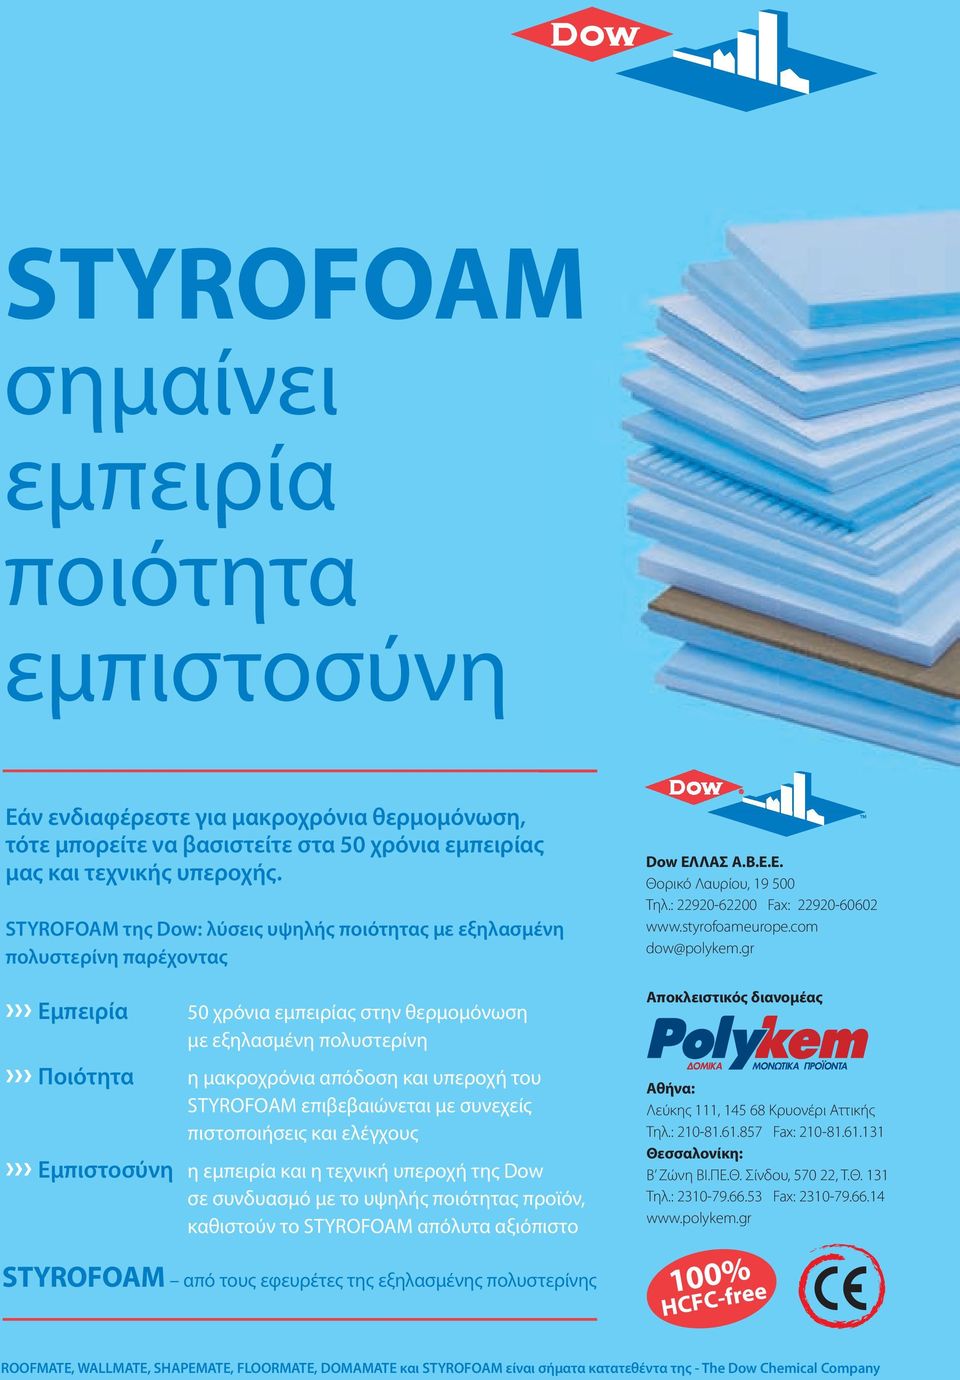 STYROFOAM επιβεβαιώνεται με συνεχείς πιστοποιήσεις και ελέγχους Εμπιστοσύνη η εμπειρία και η τεχνική υπεροχή της Dow σε συνδυασμό με το υψηλής ποιότητας προϊόν, καθιστούν το STYROFOAM απόλυτα